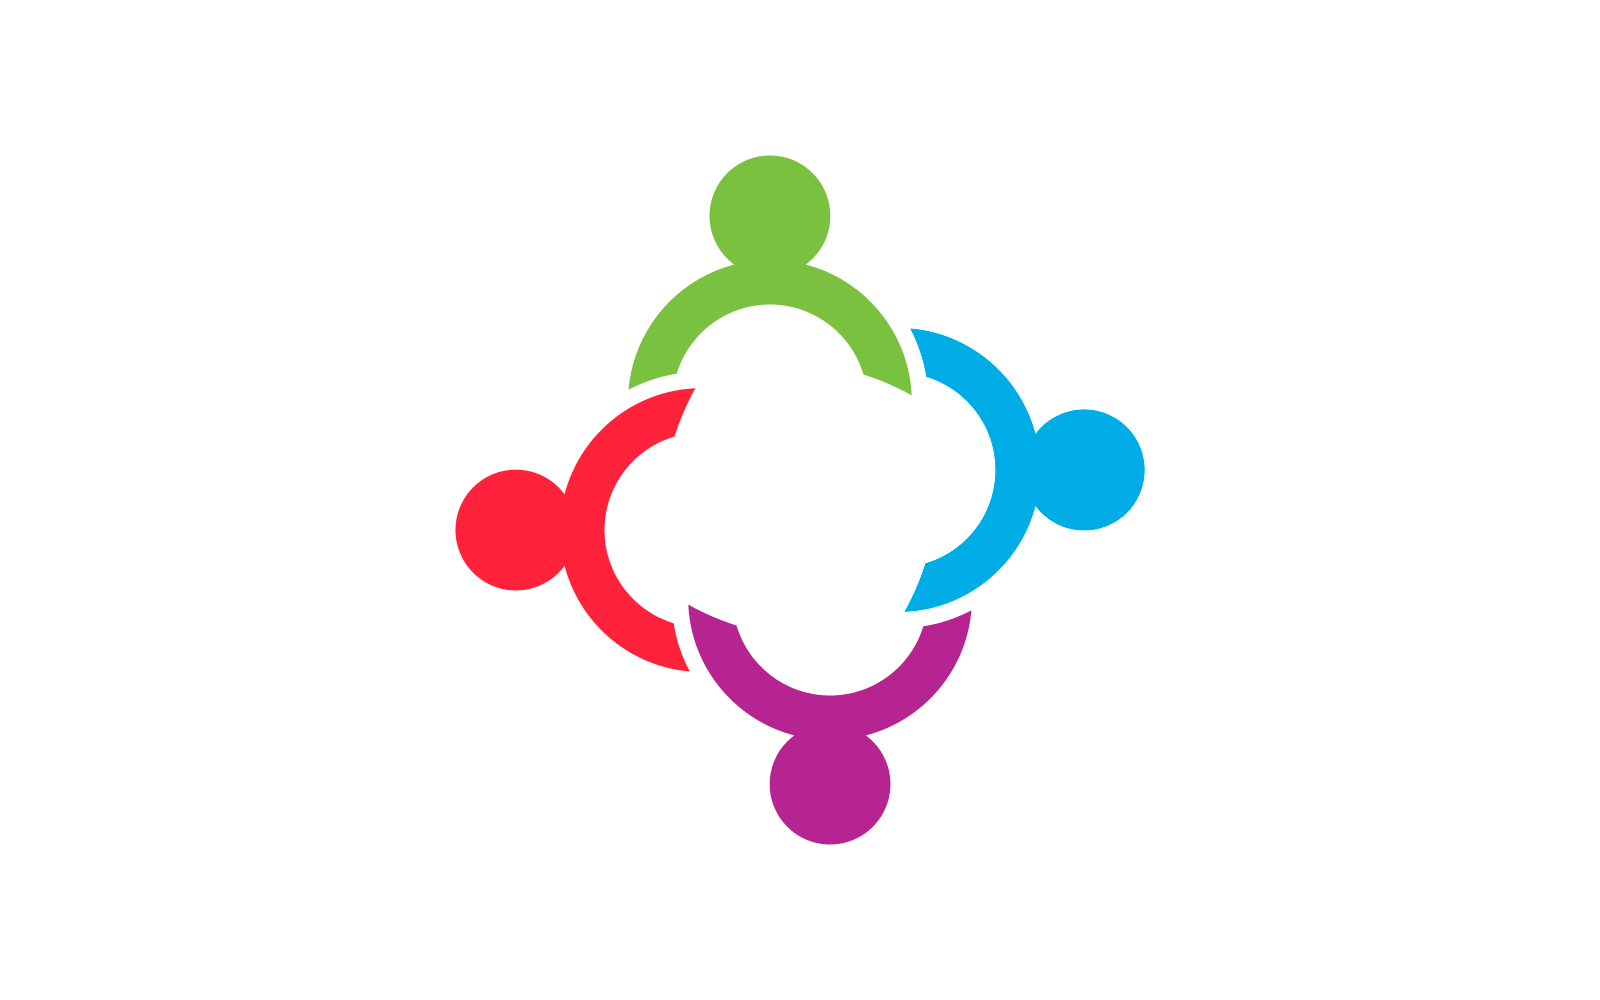 Community, network and social logo flat design vector